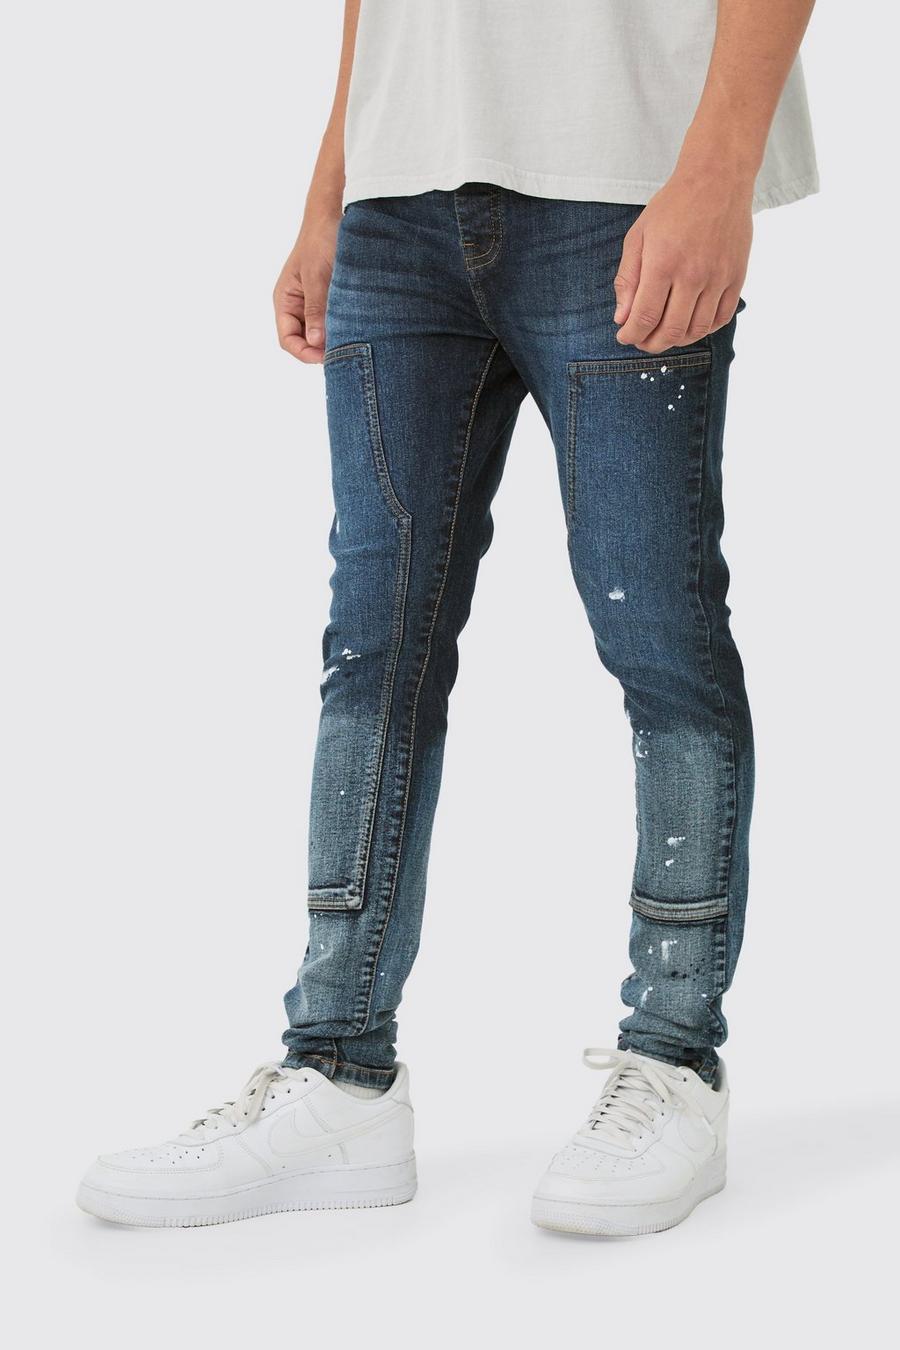 Jeans Super Skinny Fit Stretch stile Carpenter con schizzi di colore blu sfumato, Blue